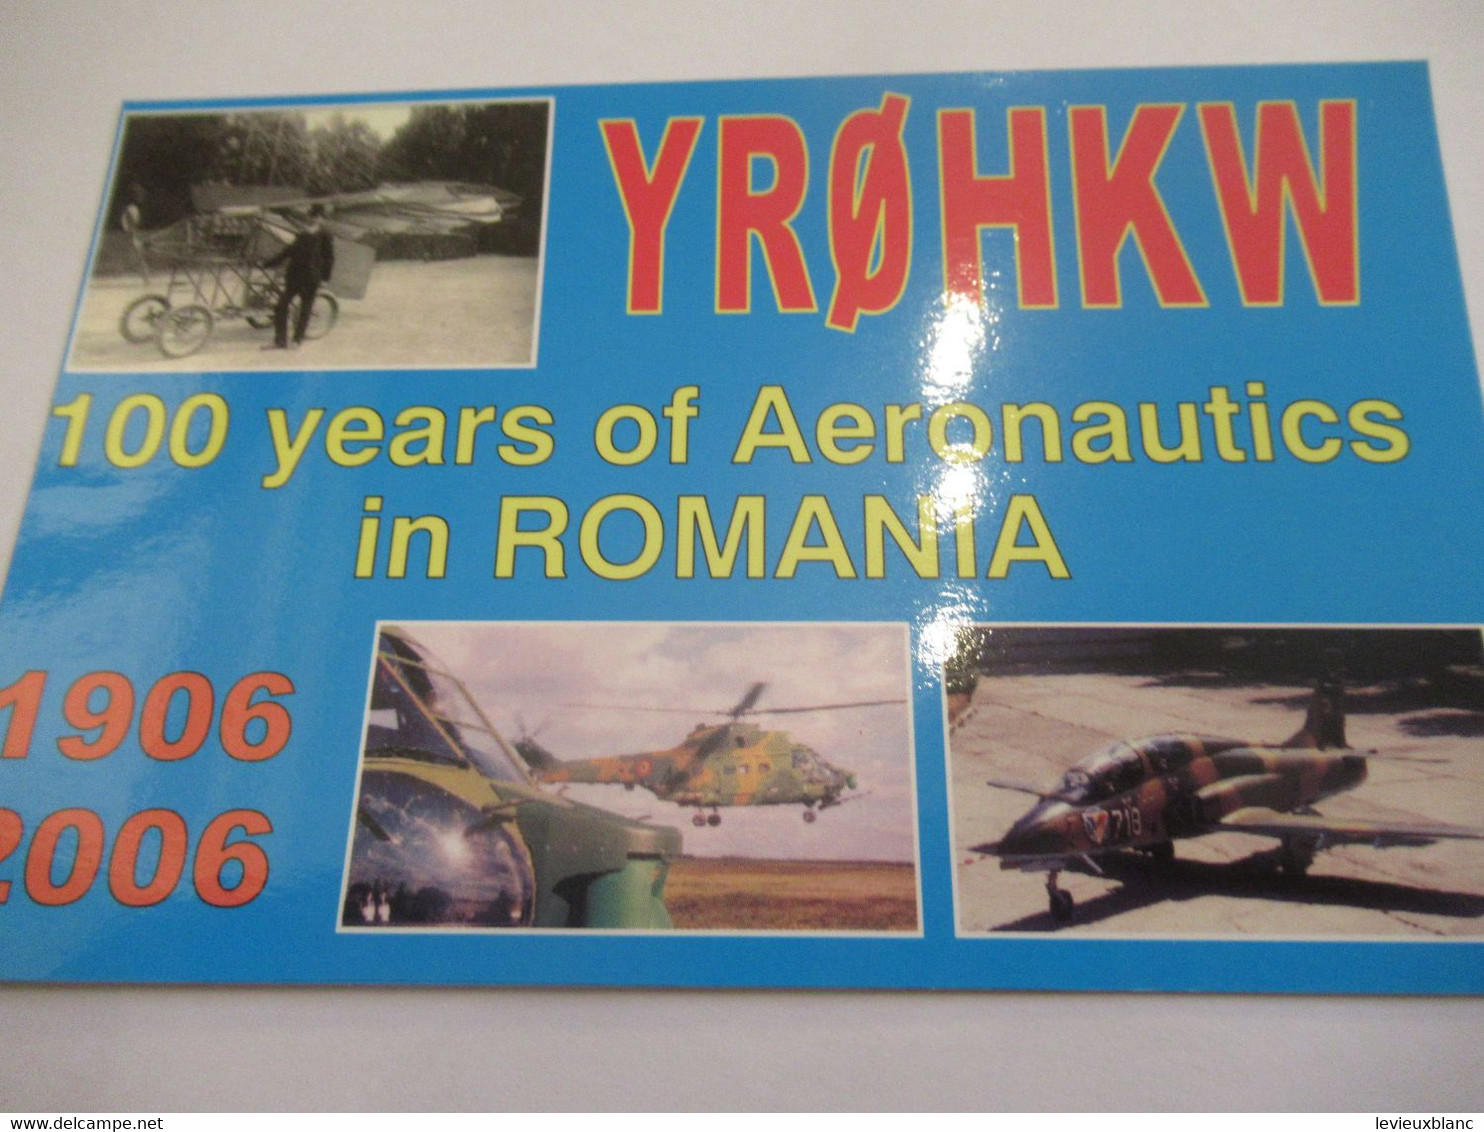 Carte  Radio Amateur Ancienne/ QSL/ROUMANIE/100 Years Of Aeronautics In ROMANIA/ 2006      CRA14 - Romania